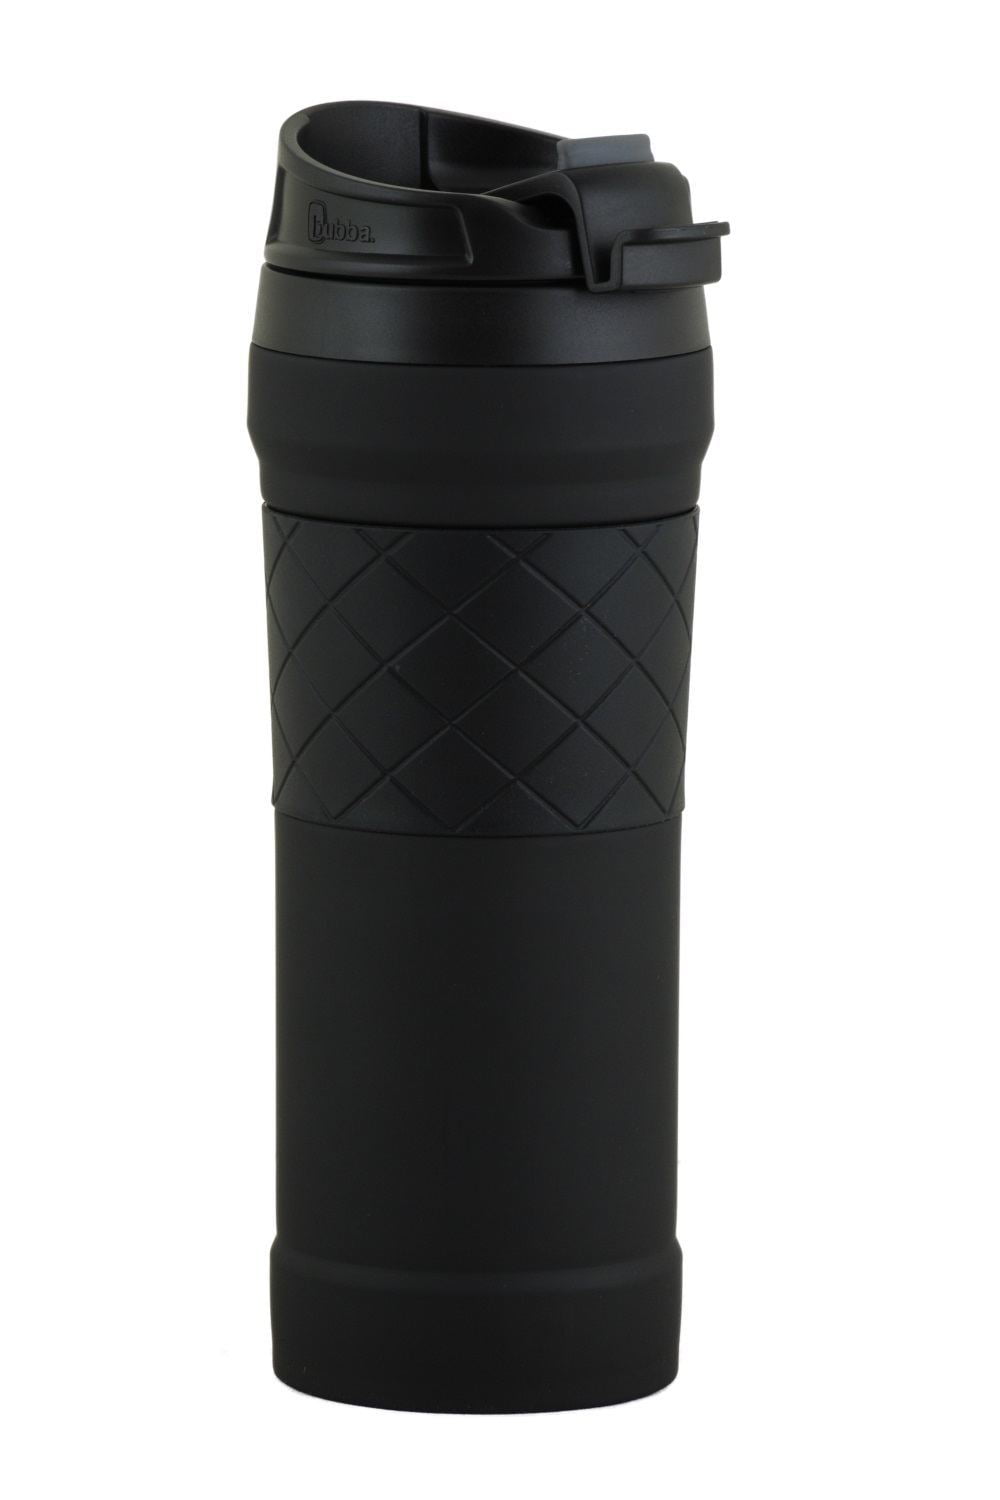 Bubba HERO Elite Vacuum-Insulated Stainless Steel Travel Mug with  TasteGuard, 16 oz, Black